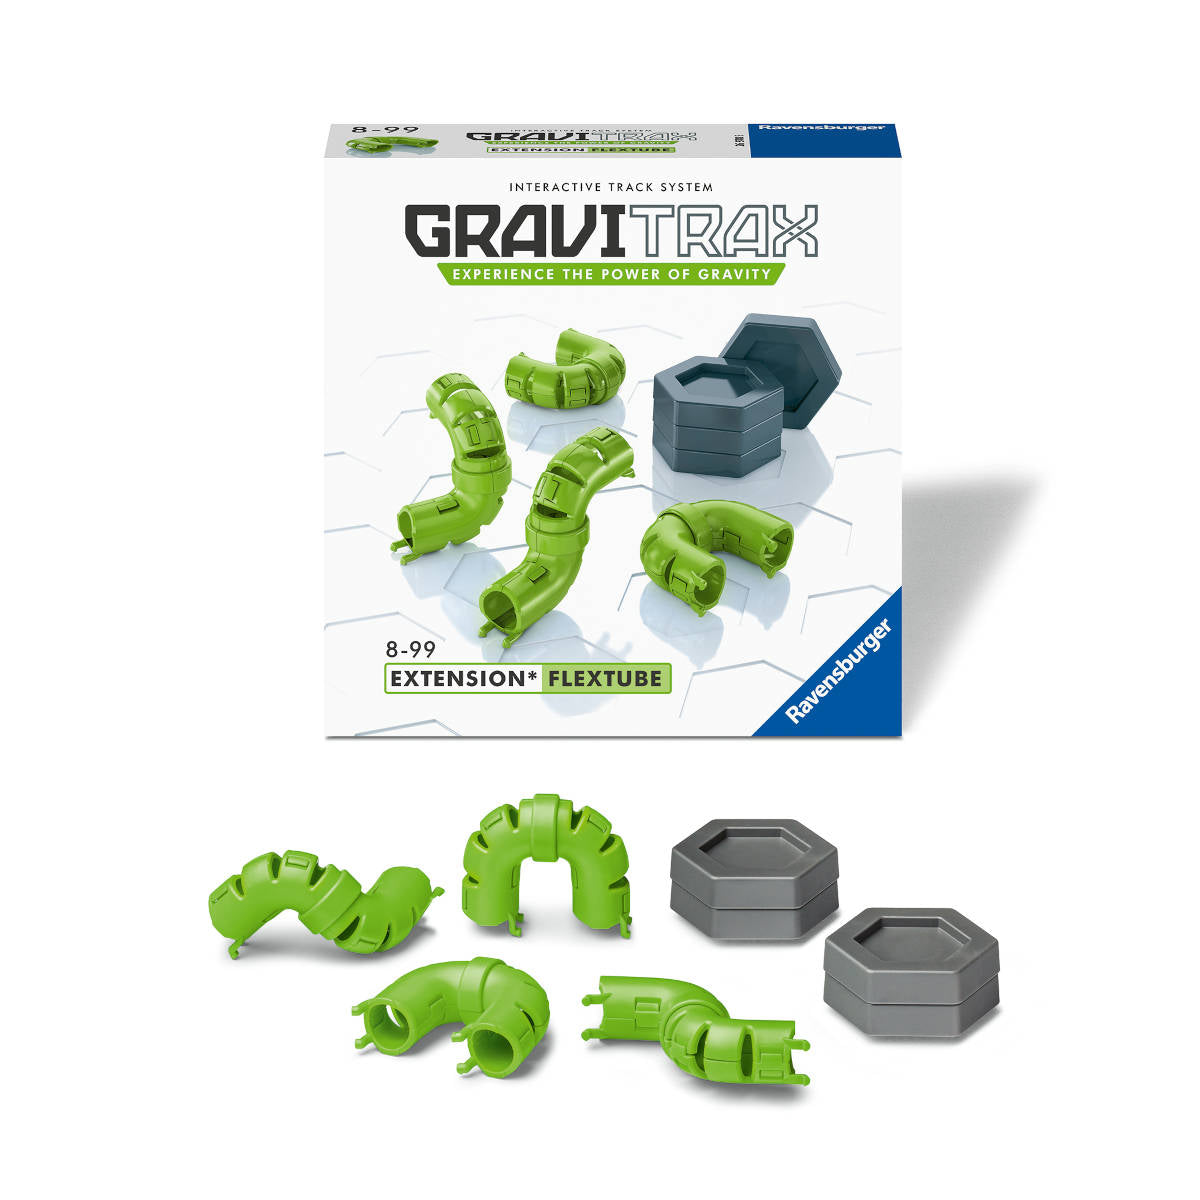 Gravitrax Expansion Flextube Set